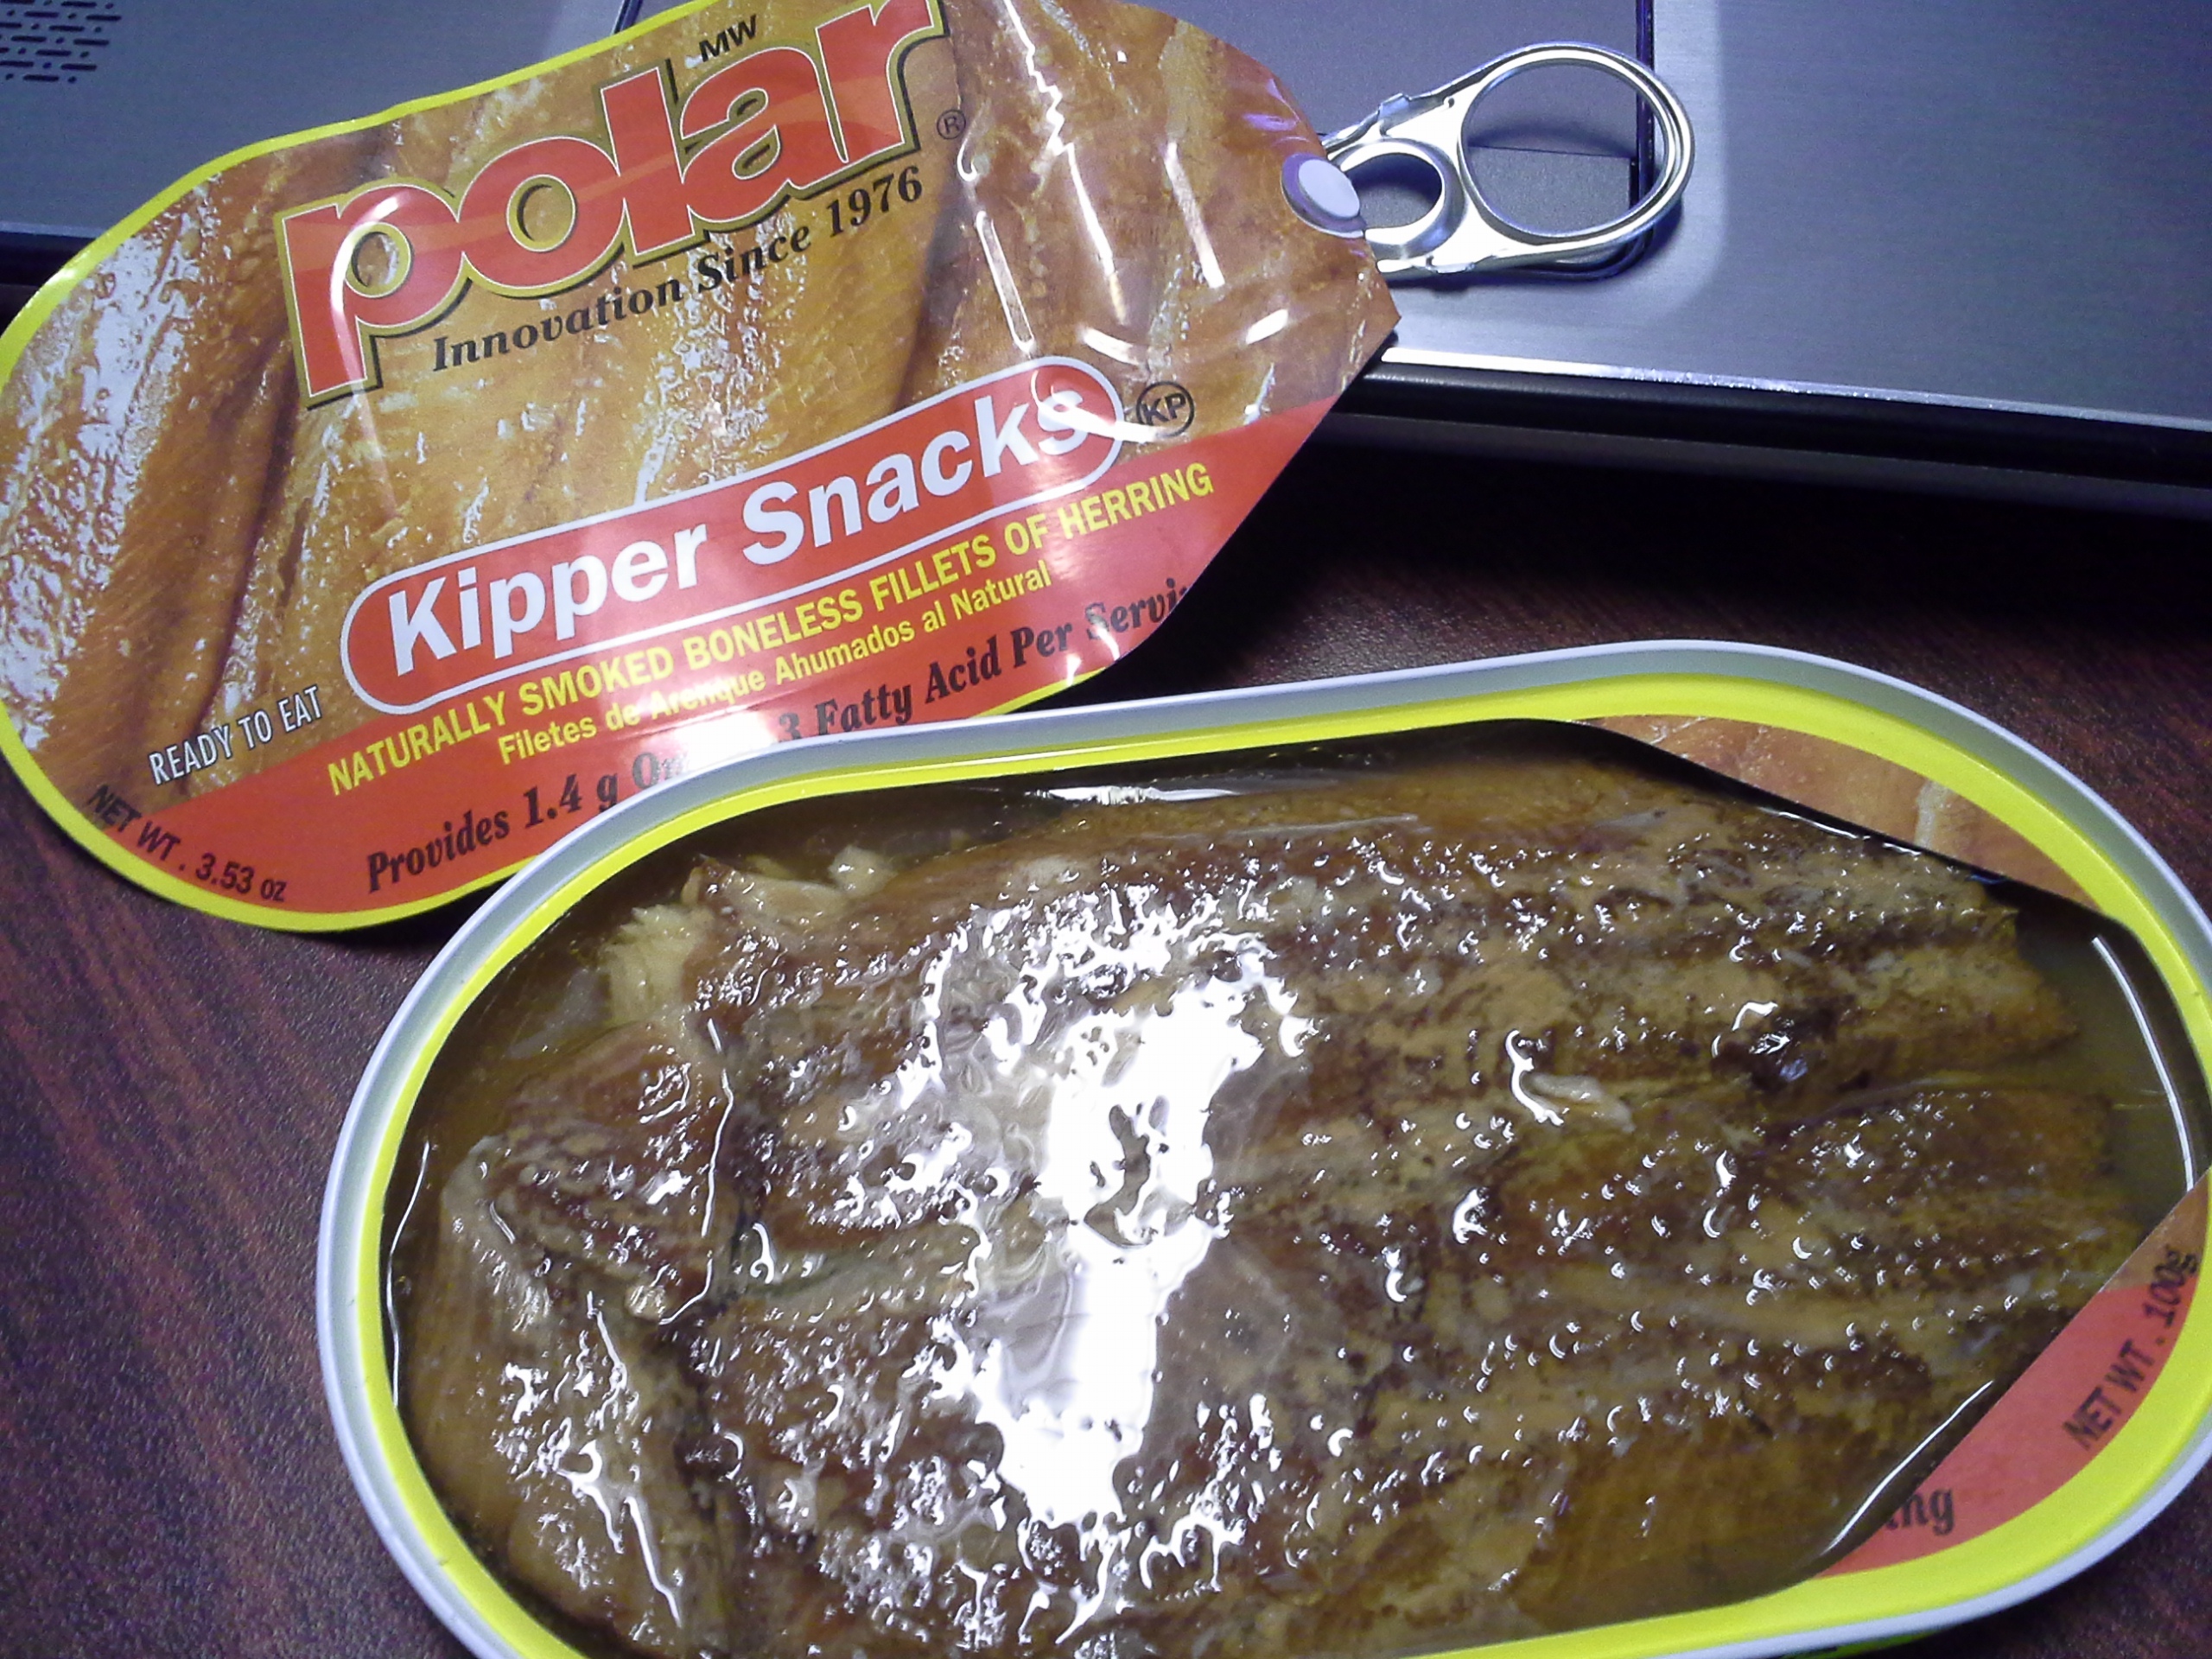 Lunch: 3:15 p.m. | 3.5 oz. of herring filets